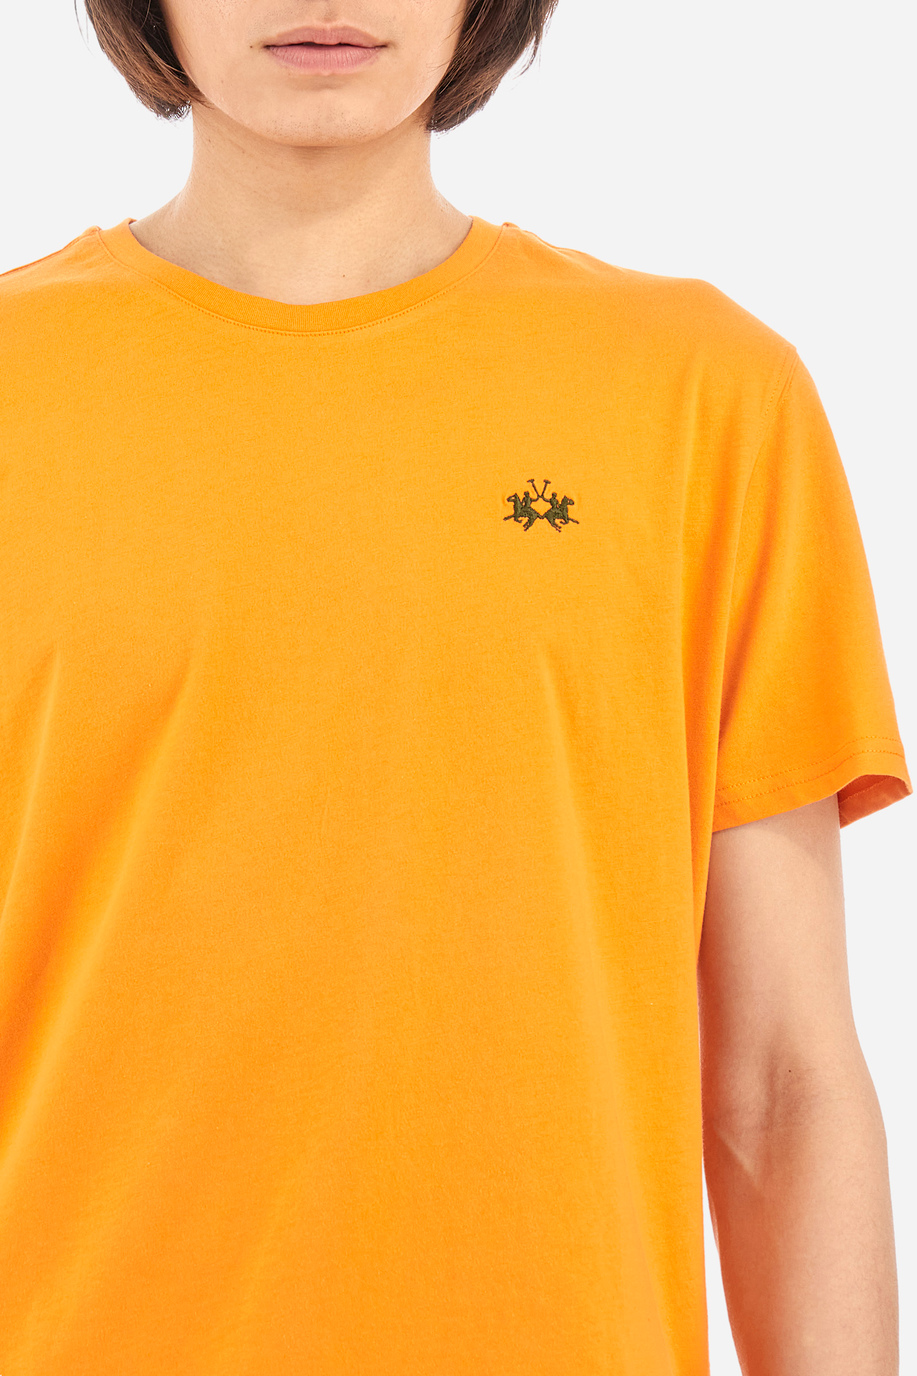 T-shirt regular fit in cotone - Serge - Nuovi arrivi uomo | La Martina - Official Online Shop